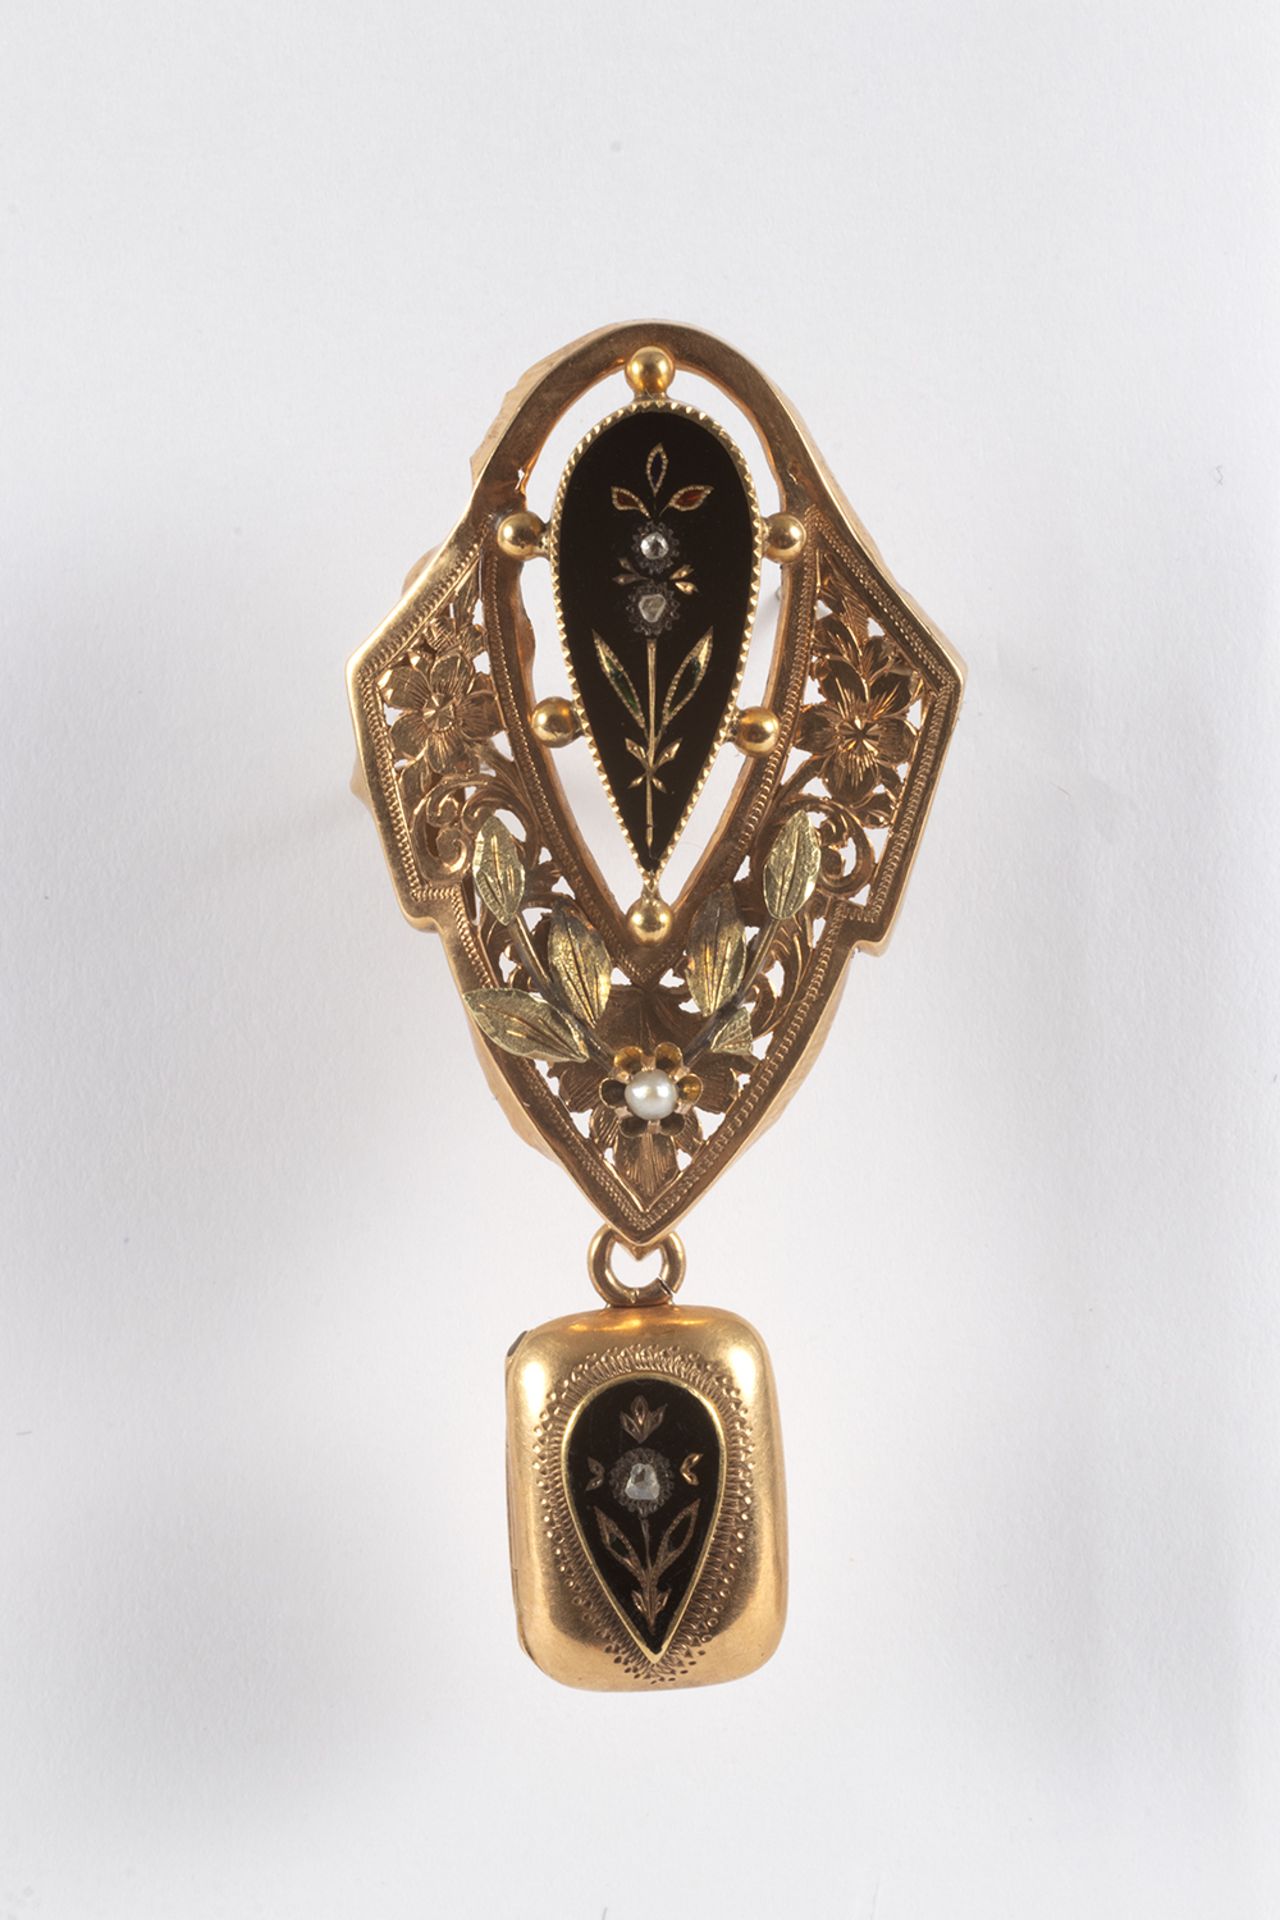 Elizabethan brooch in gold, enamel, rose cut diamonds and pearl.